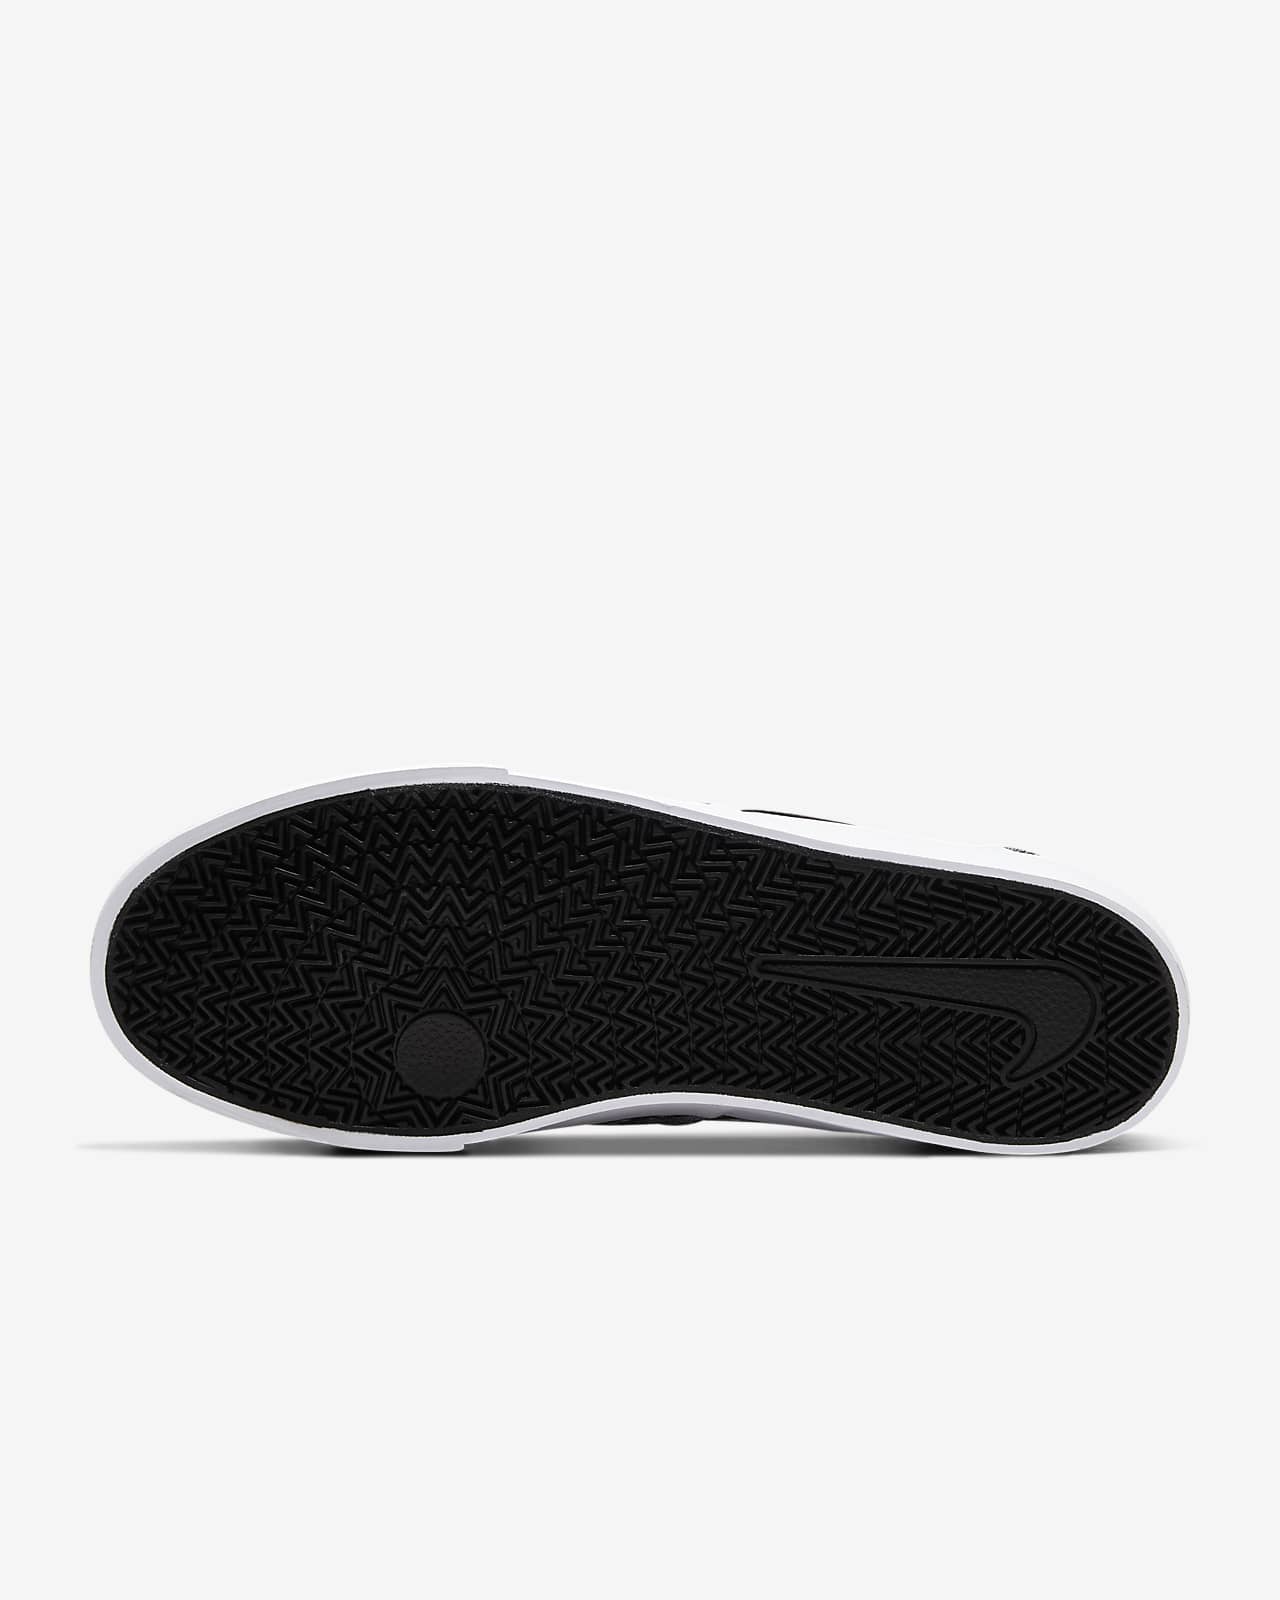 Nike SB Charge Slip Premium Skate Shoe 